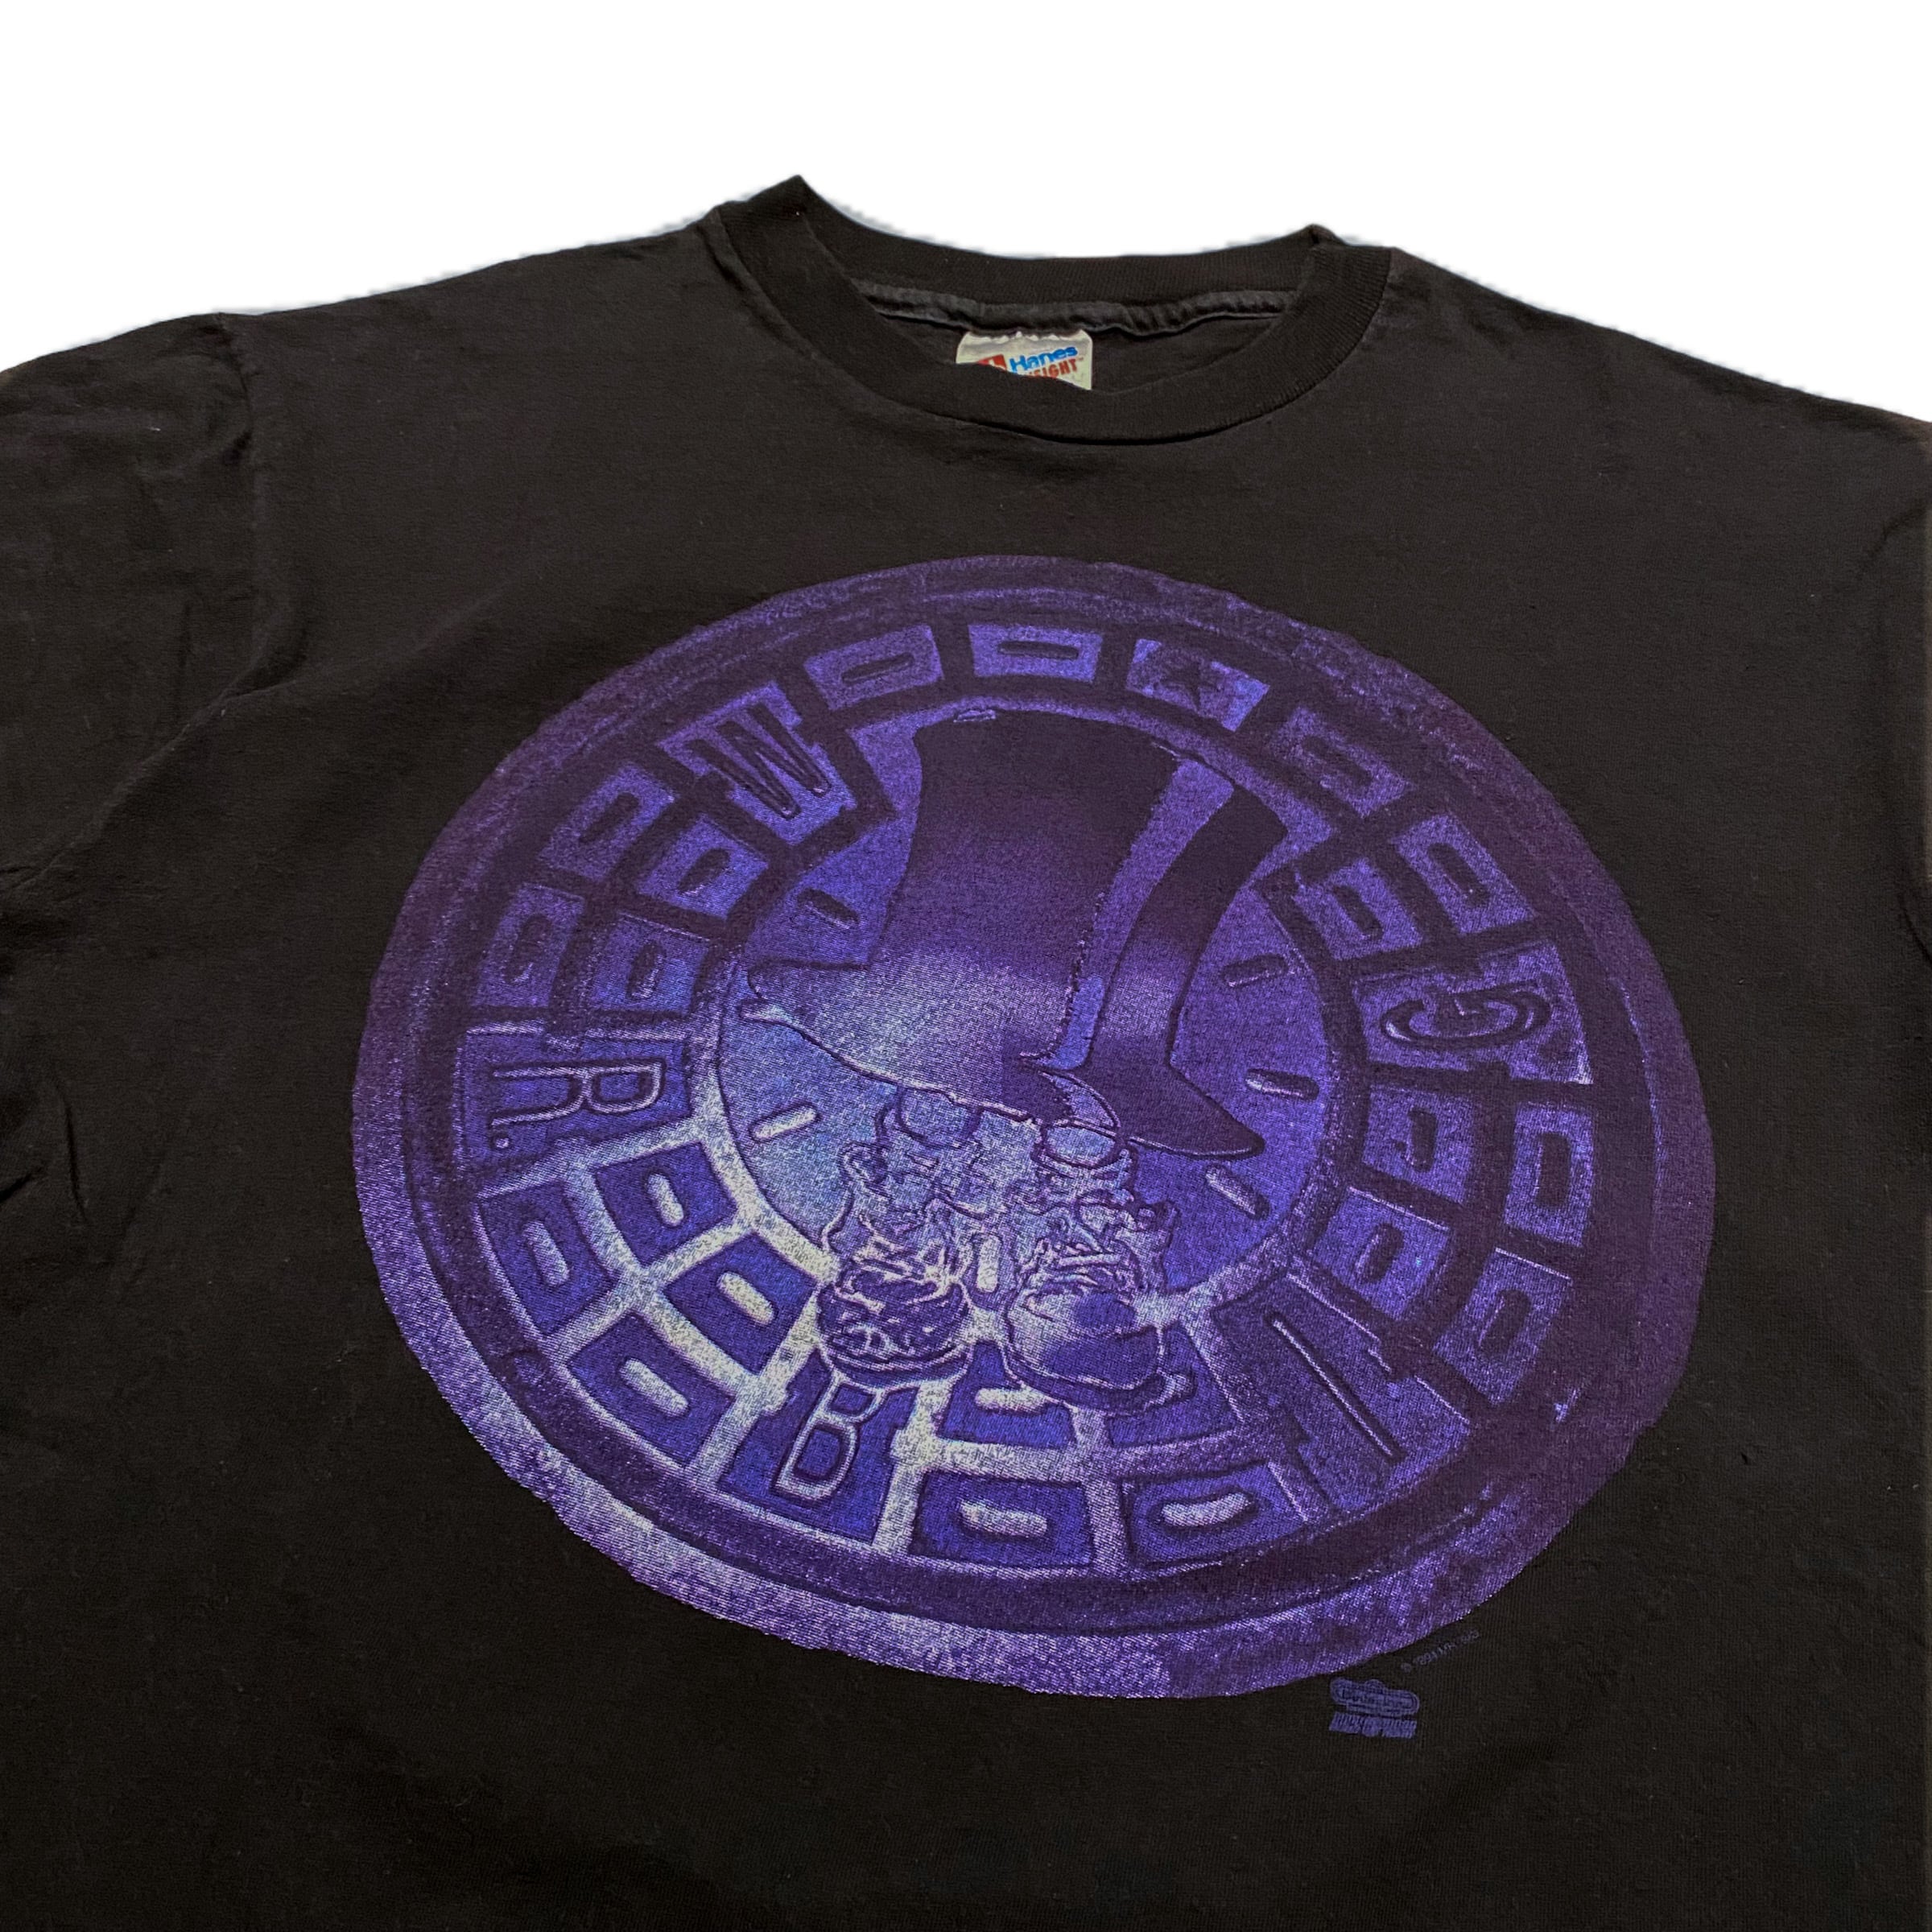 90's USA製 MR.BIG Japan Demonium Tour T-Shirt L / ミスタービッグ ジャパンツアー バンドTシャツ  両面プリント 古着 ヴィンテージ